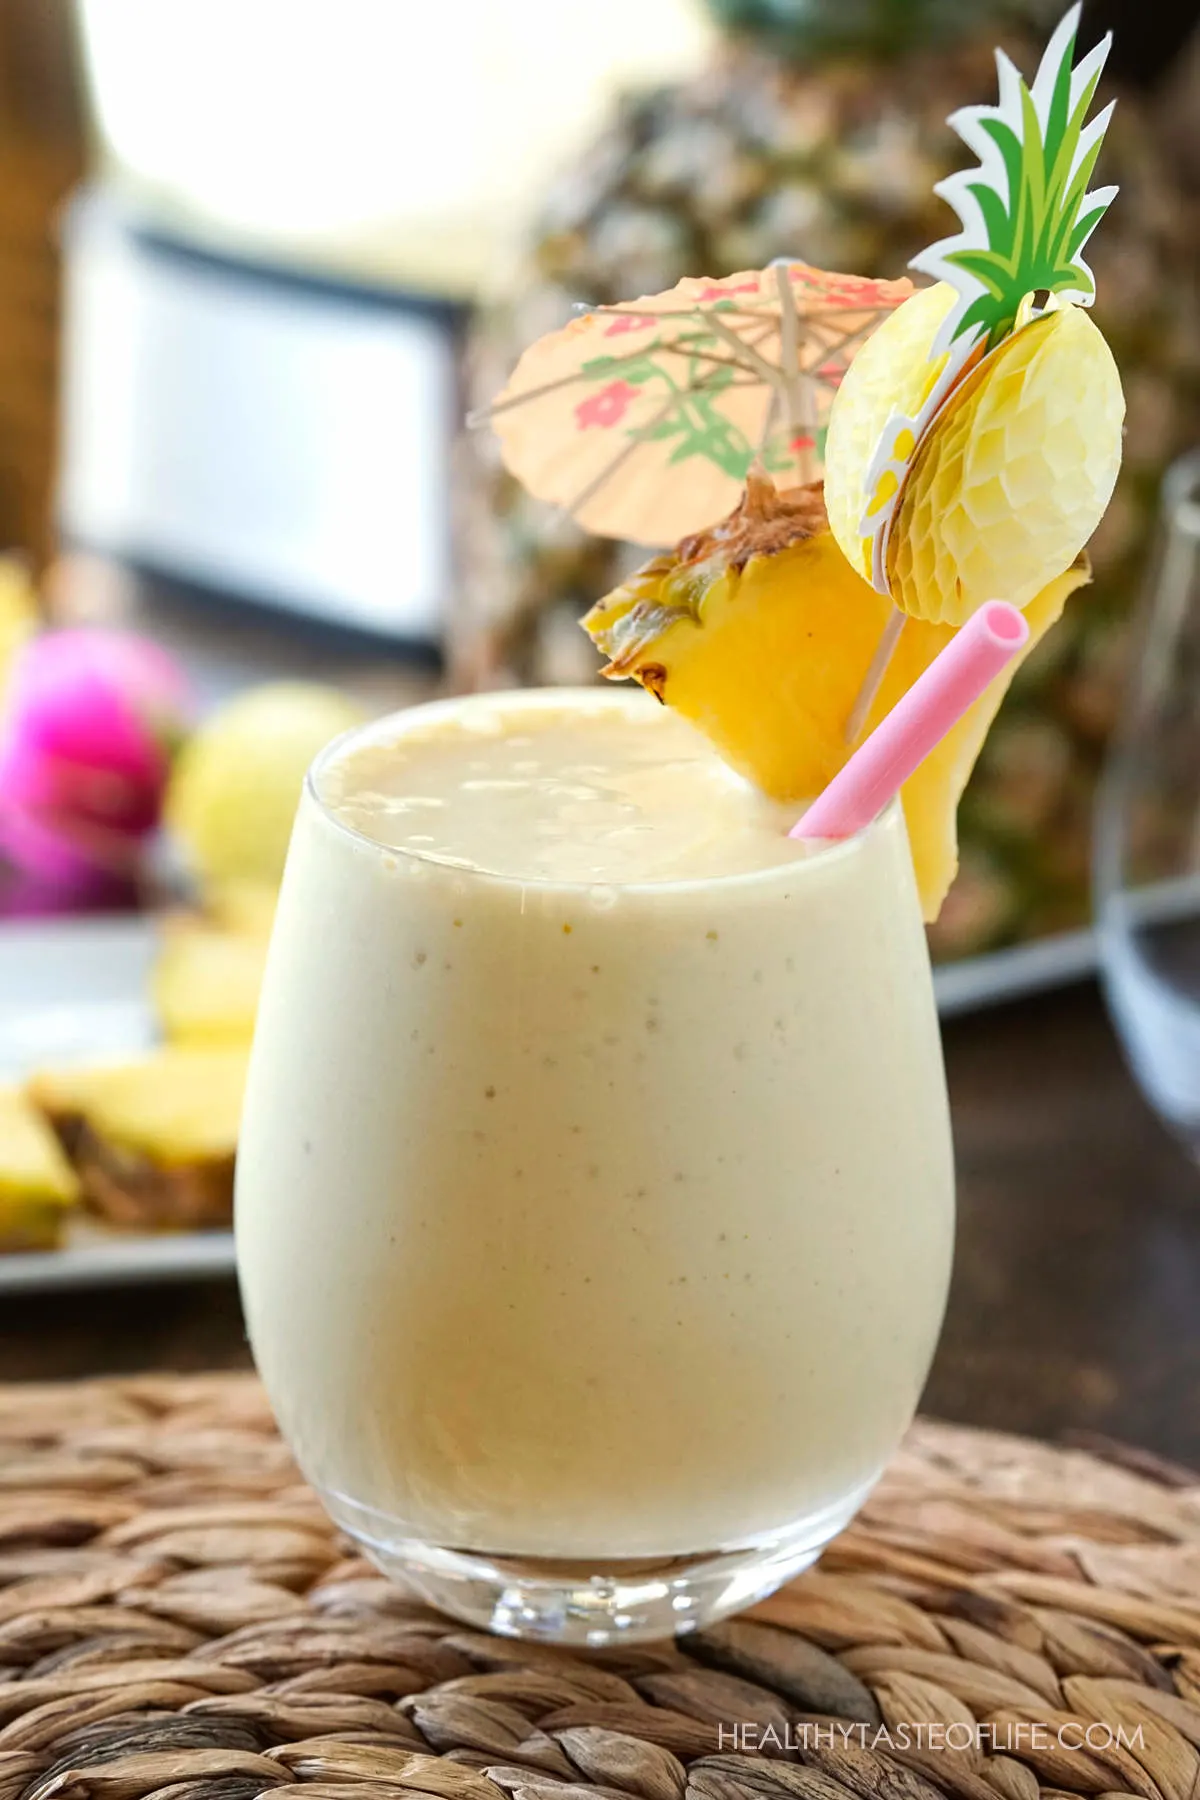 Coconut Milkshake With Pineapple Wedge decorated like pina colada.